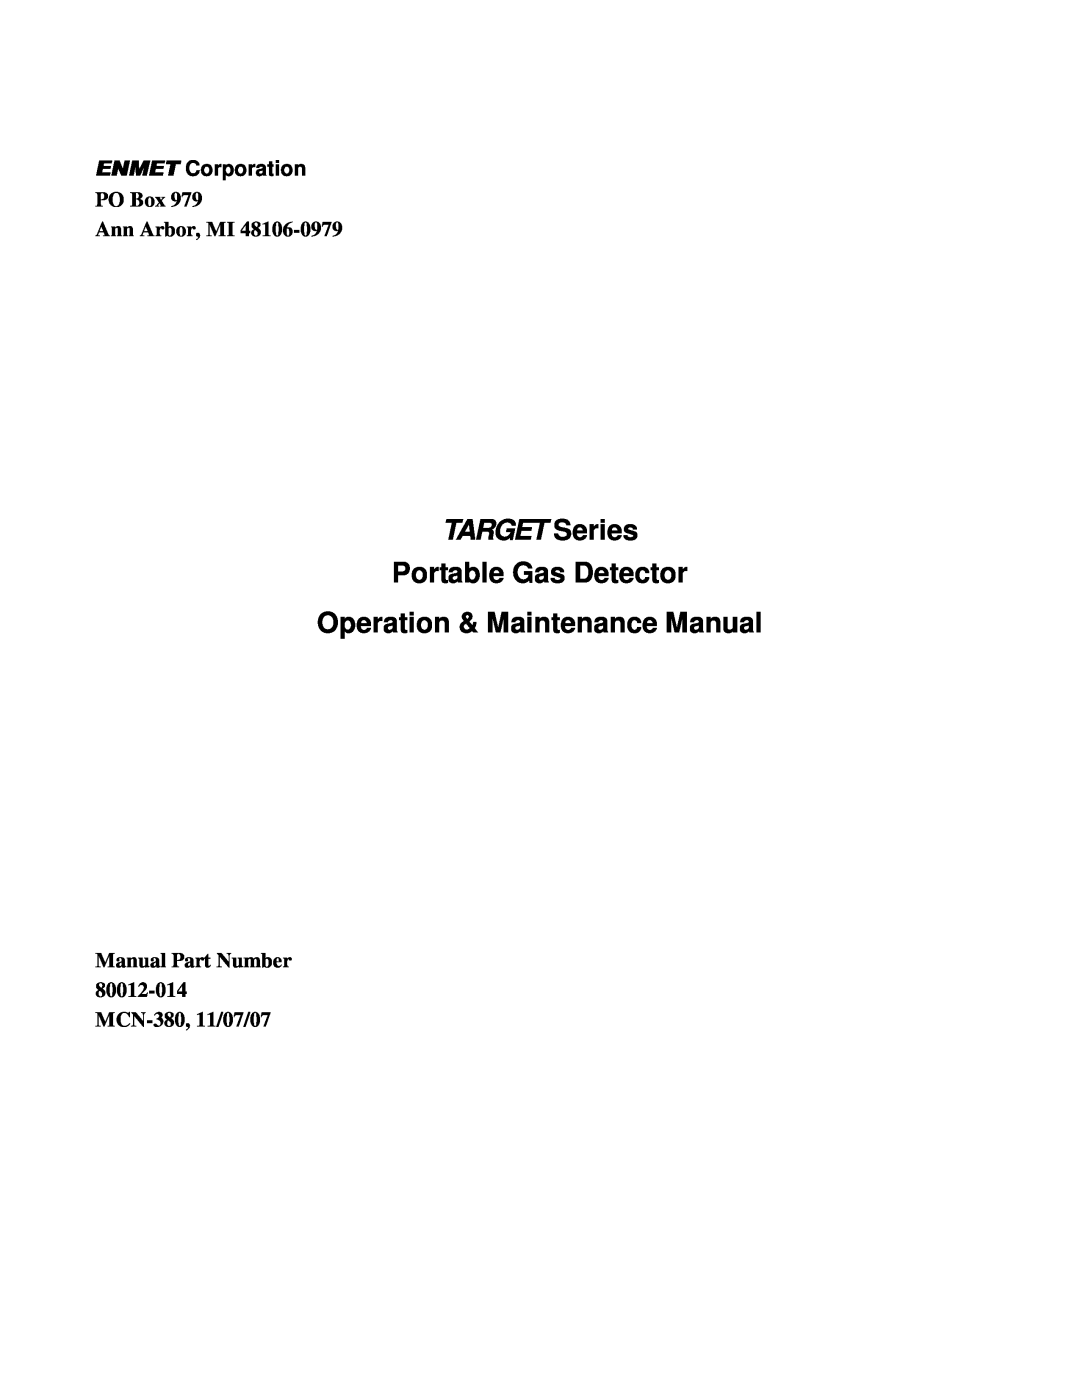 O2 Innovations pmn manual ENMET Corporation, TARGET Series, Portable Gas Detector, Operation & Maintenance Manual 